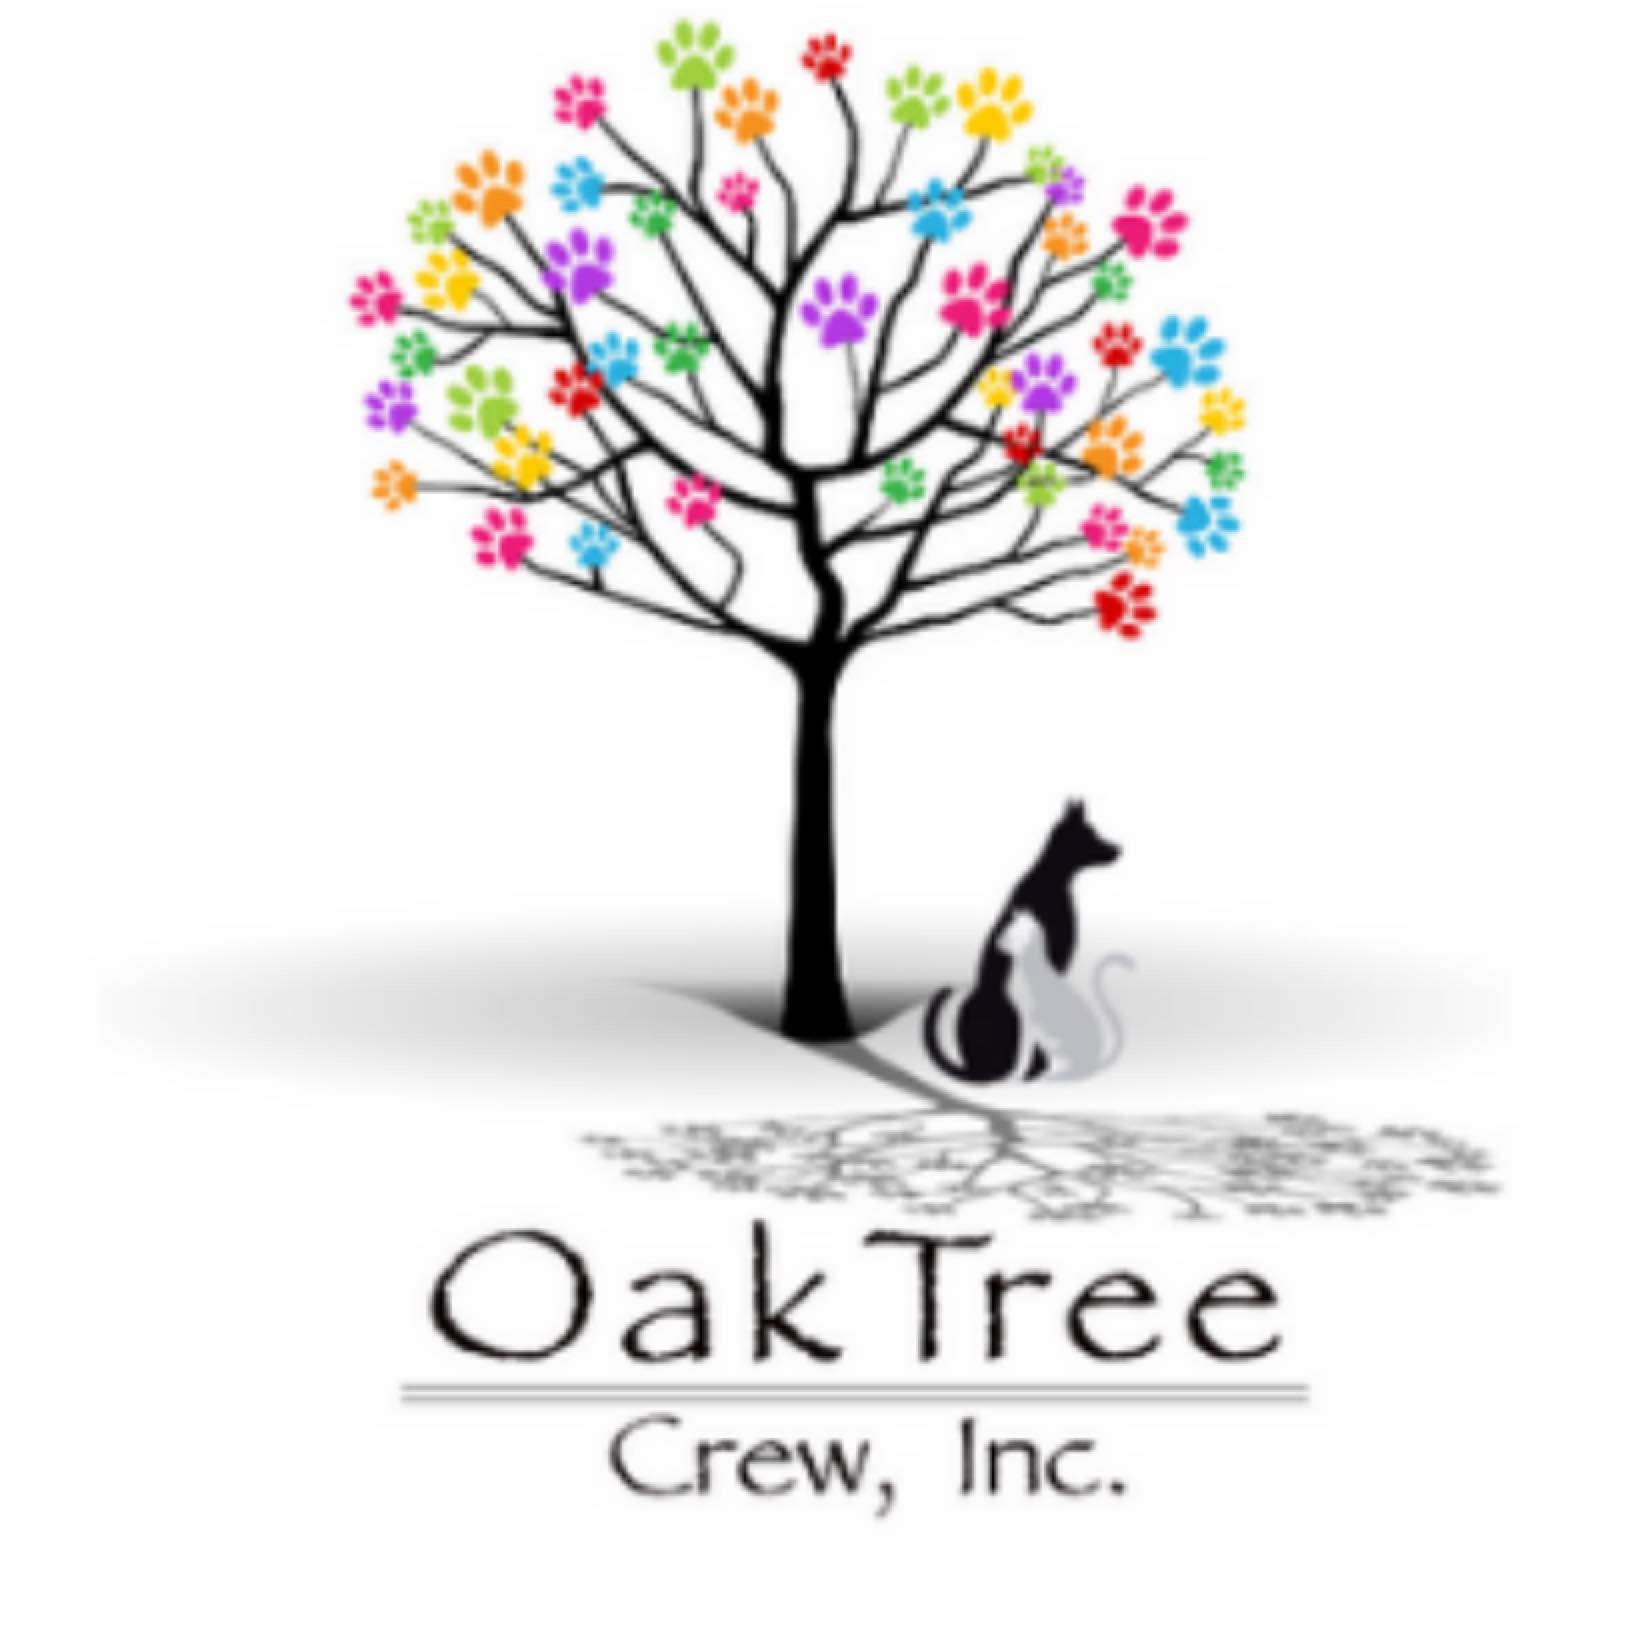 OakTree Crew, Inc